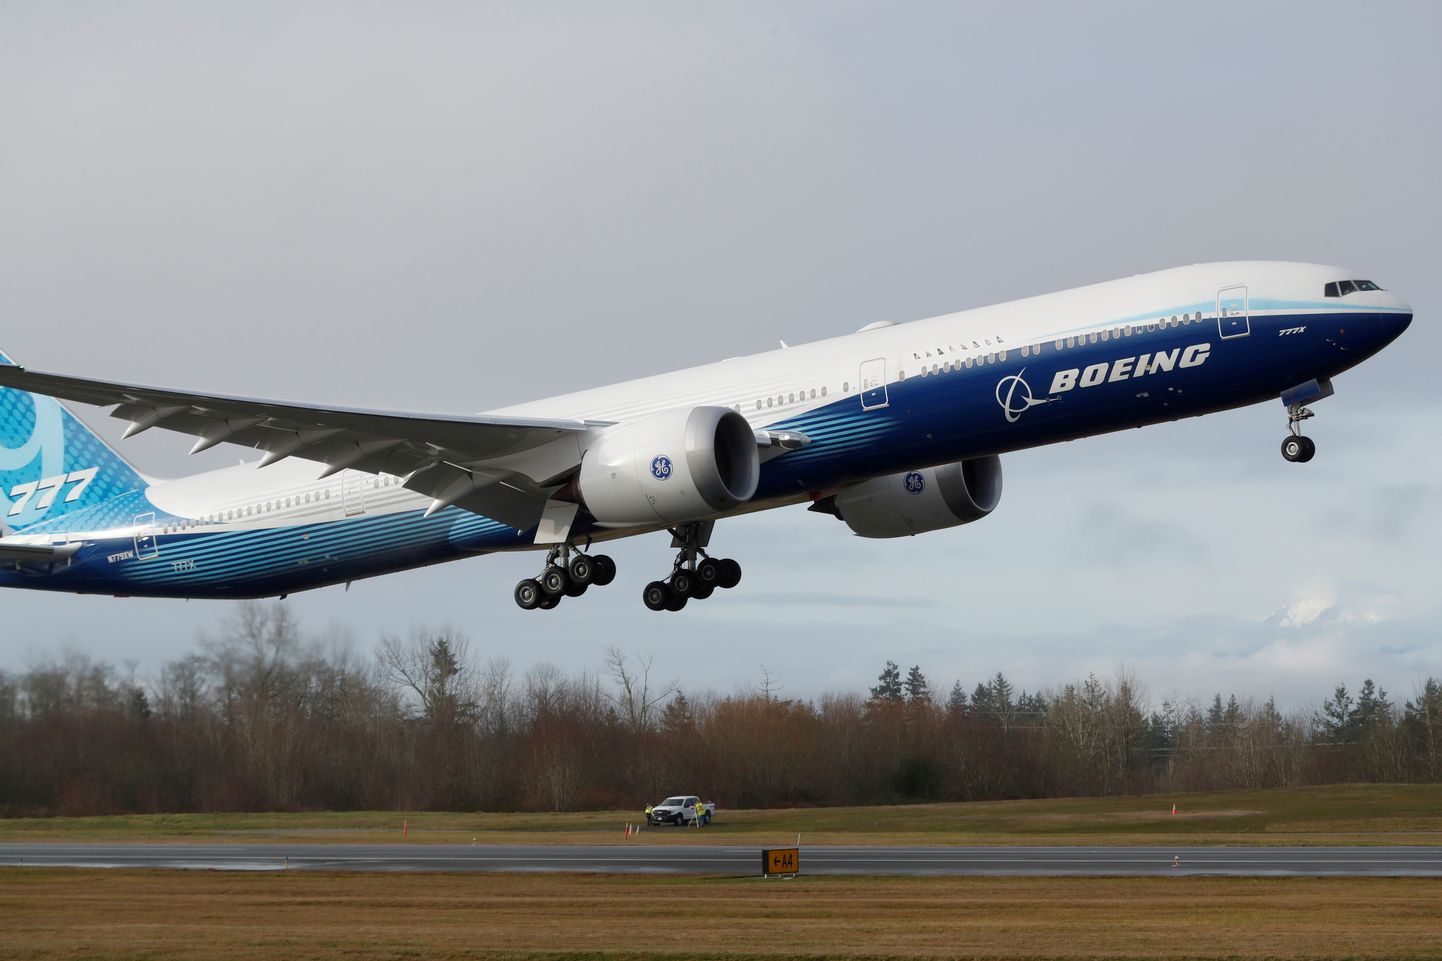 Boeing 777X lennuk tõusmas õhku.